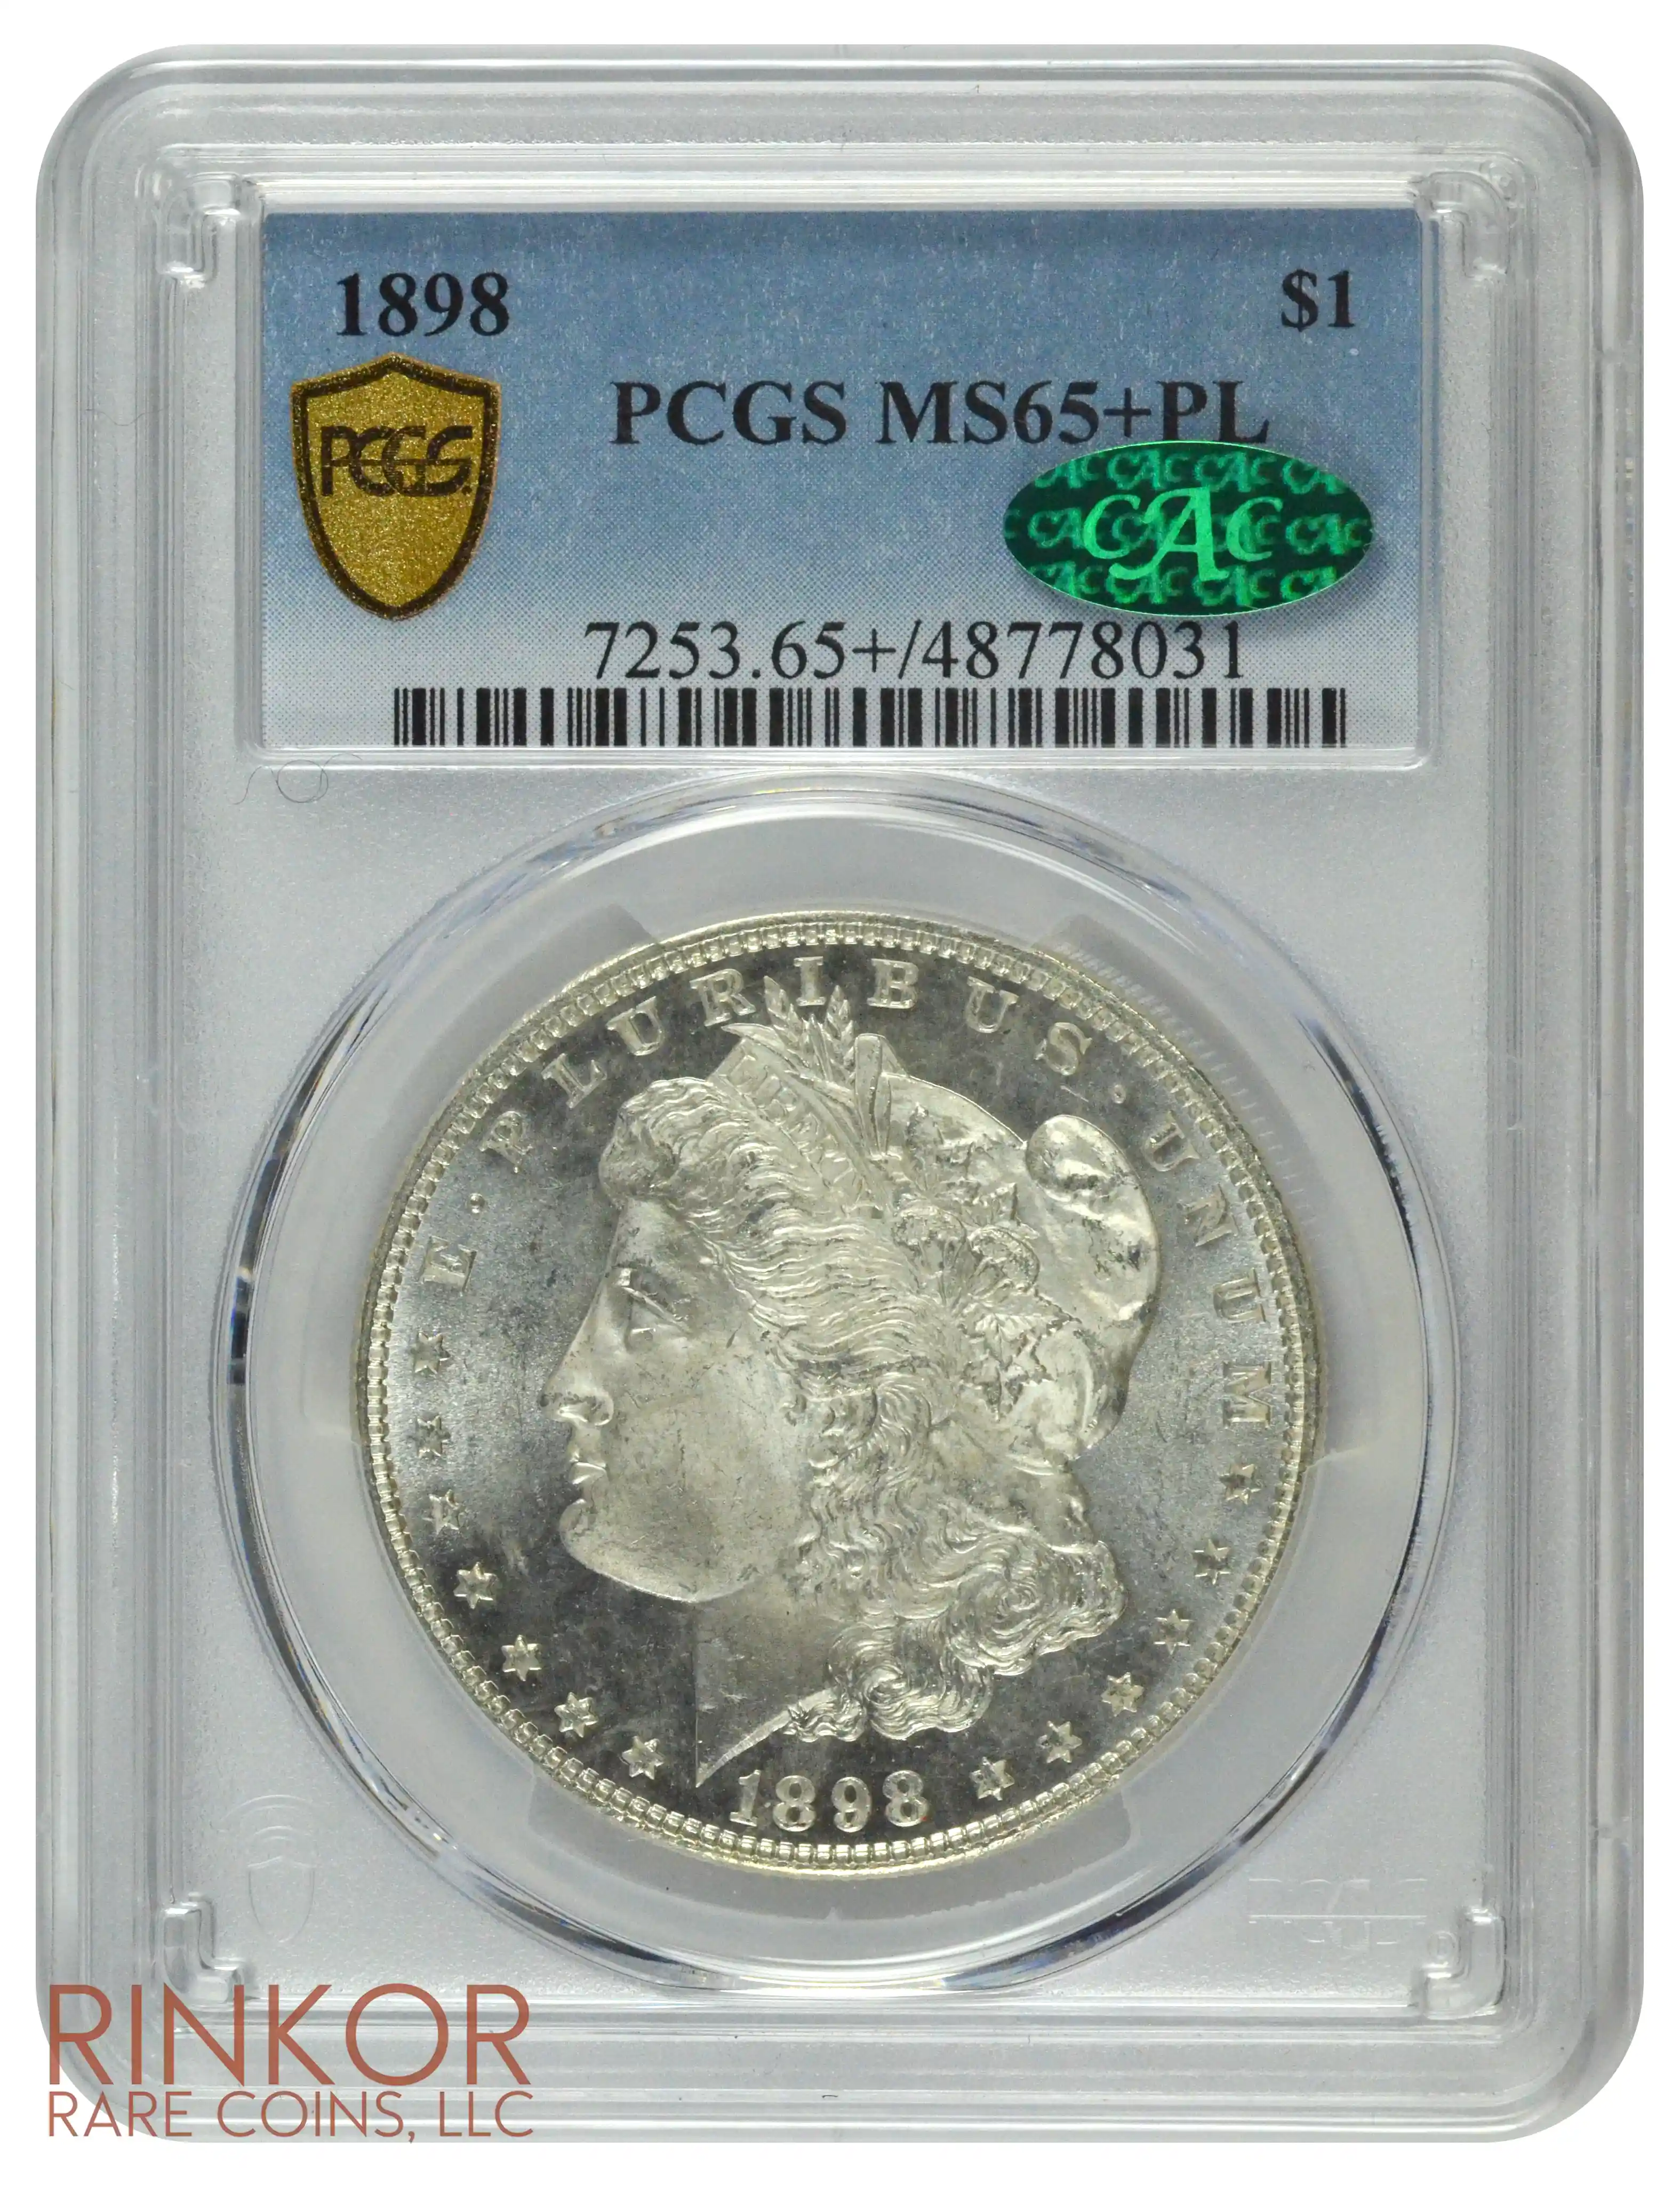 1898 $1 PCGS MS 65+ PL CAC